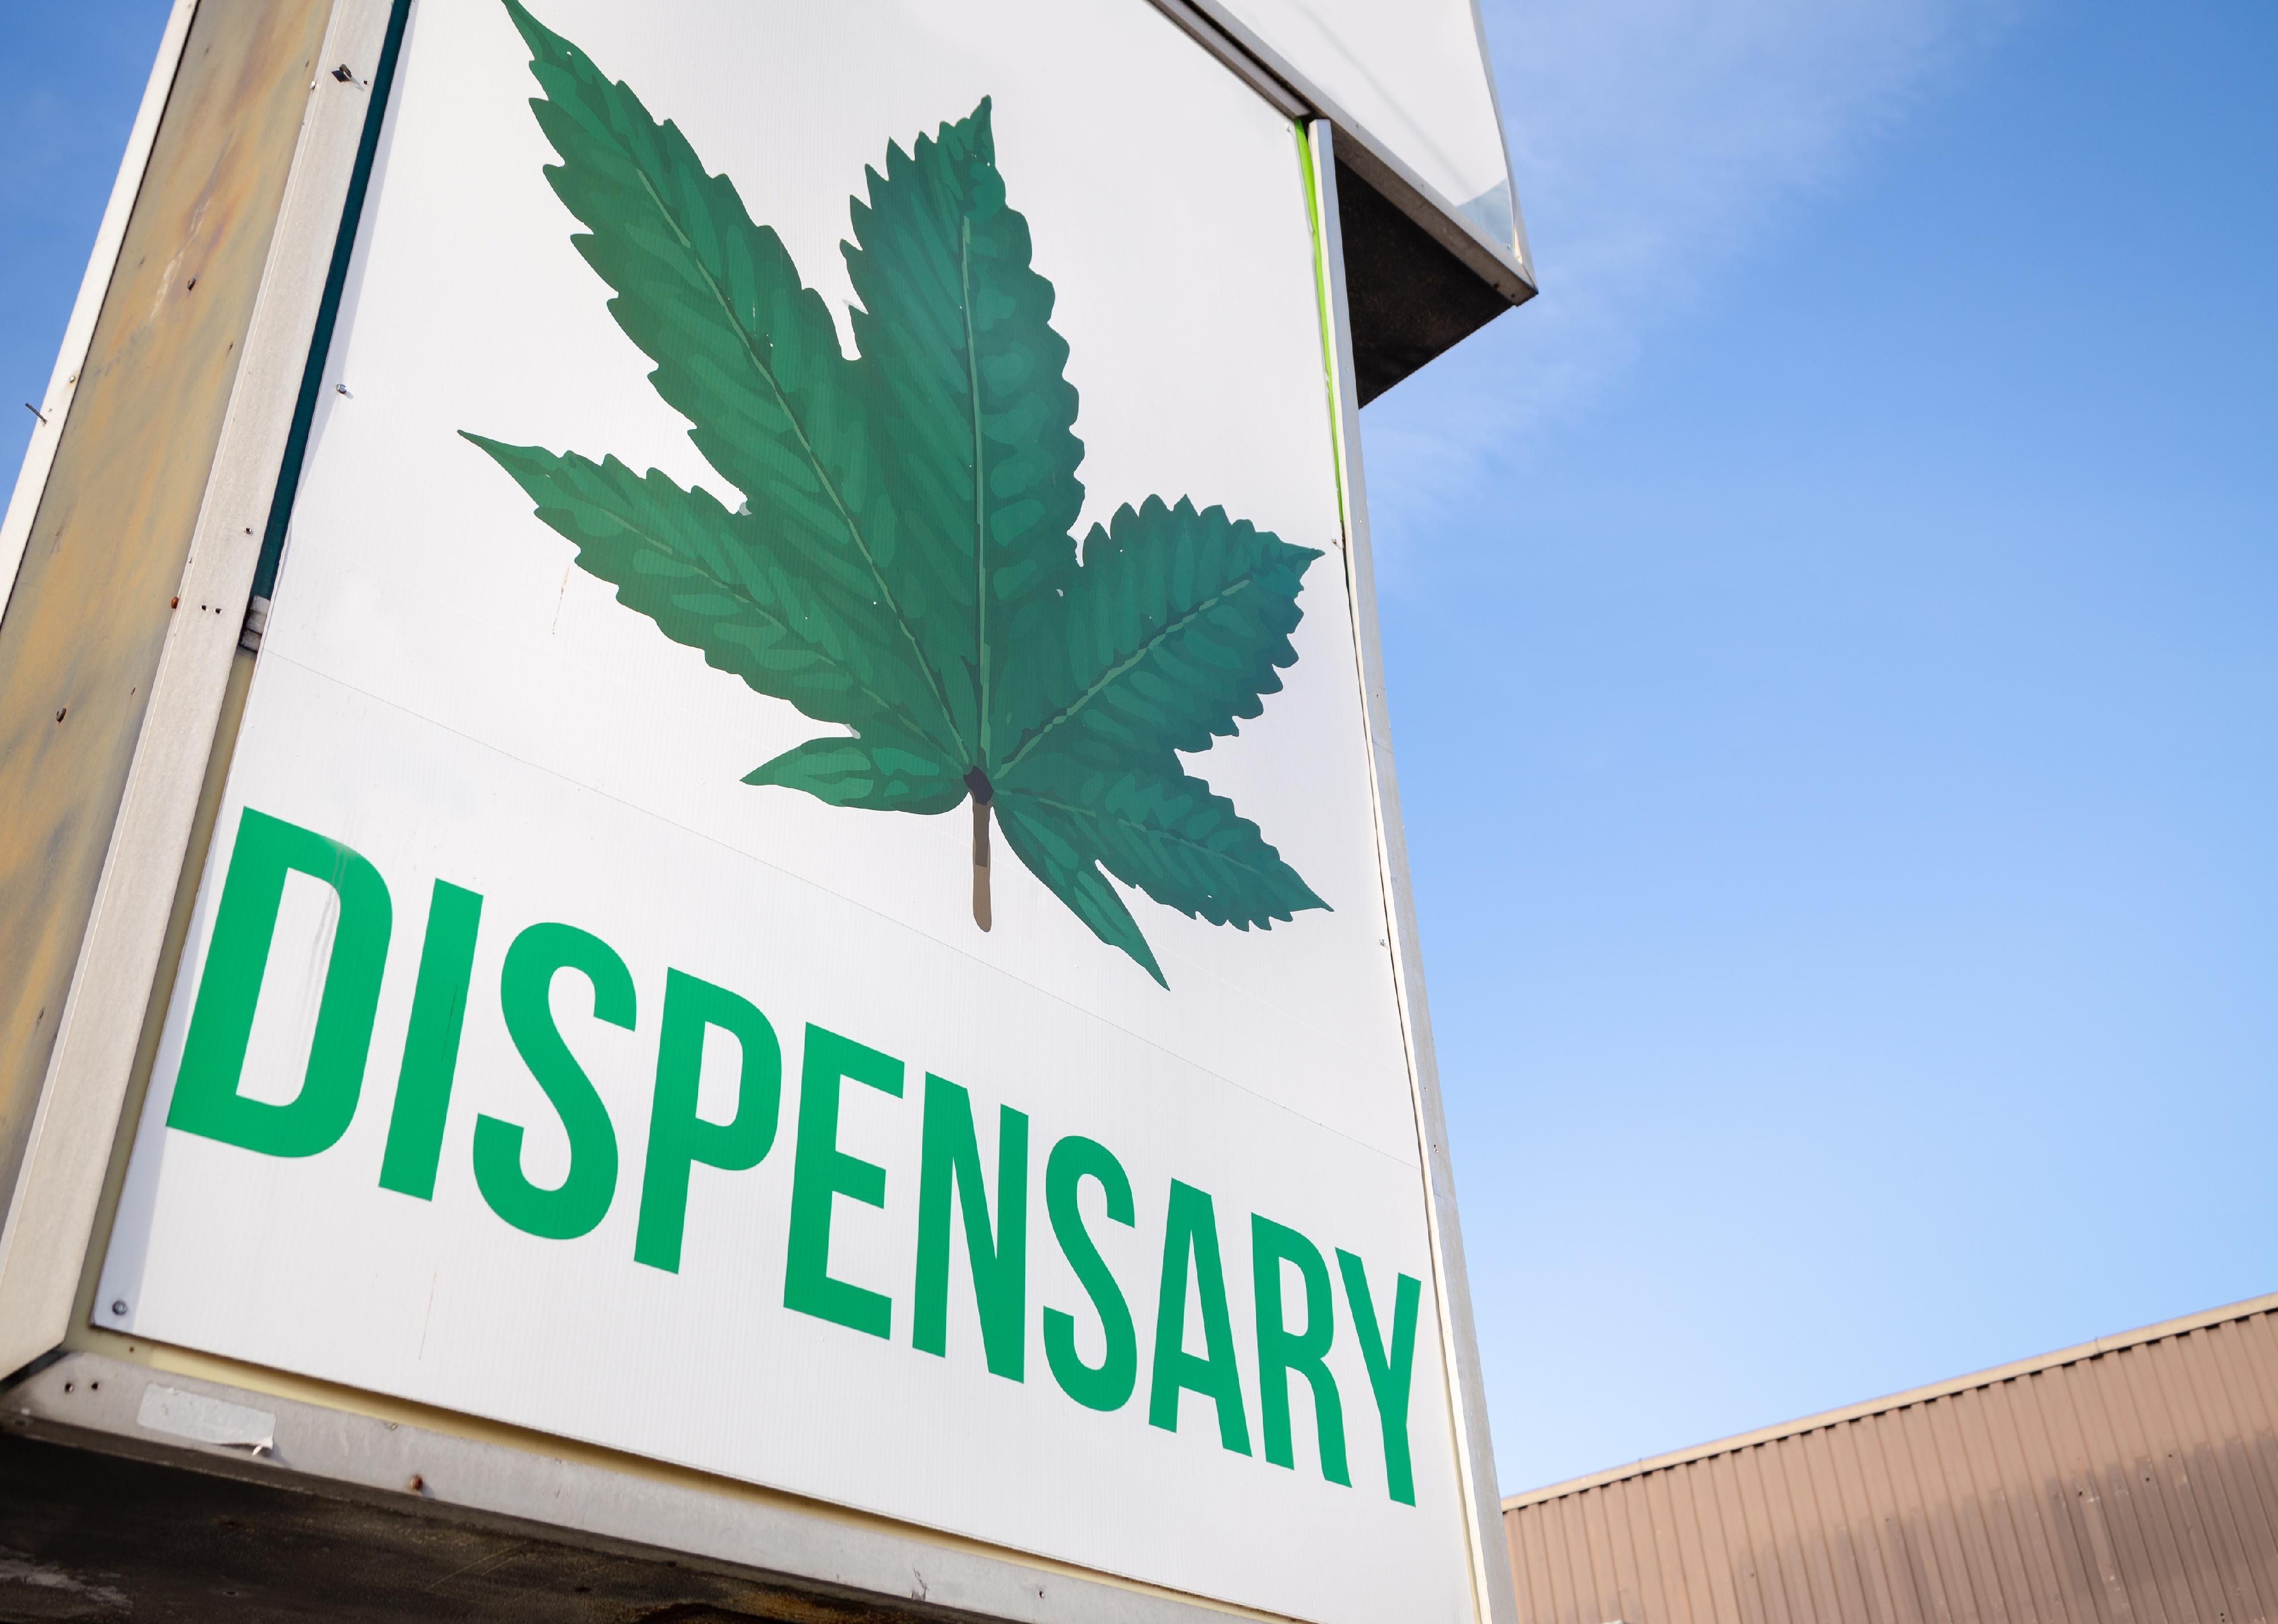 A cannabis dispensary sign with a large marijuana leaf on it.